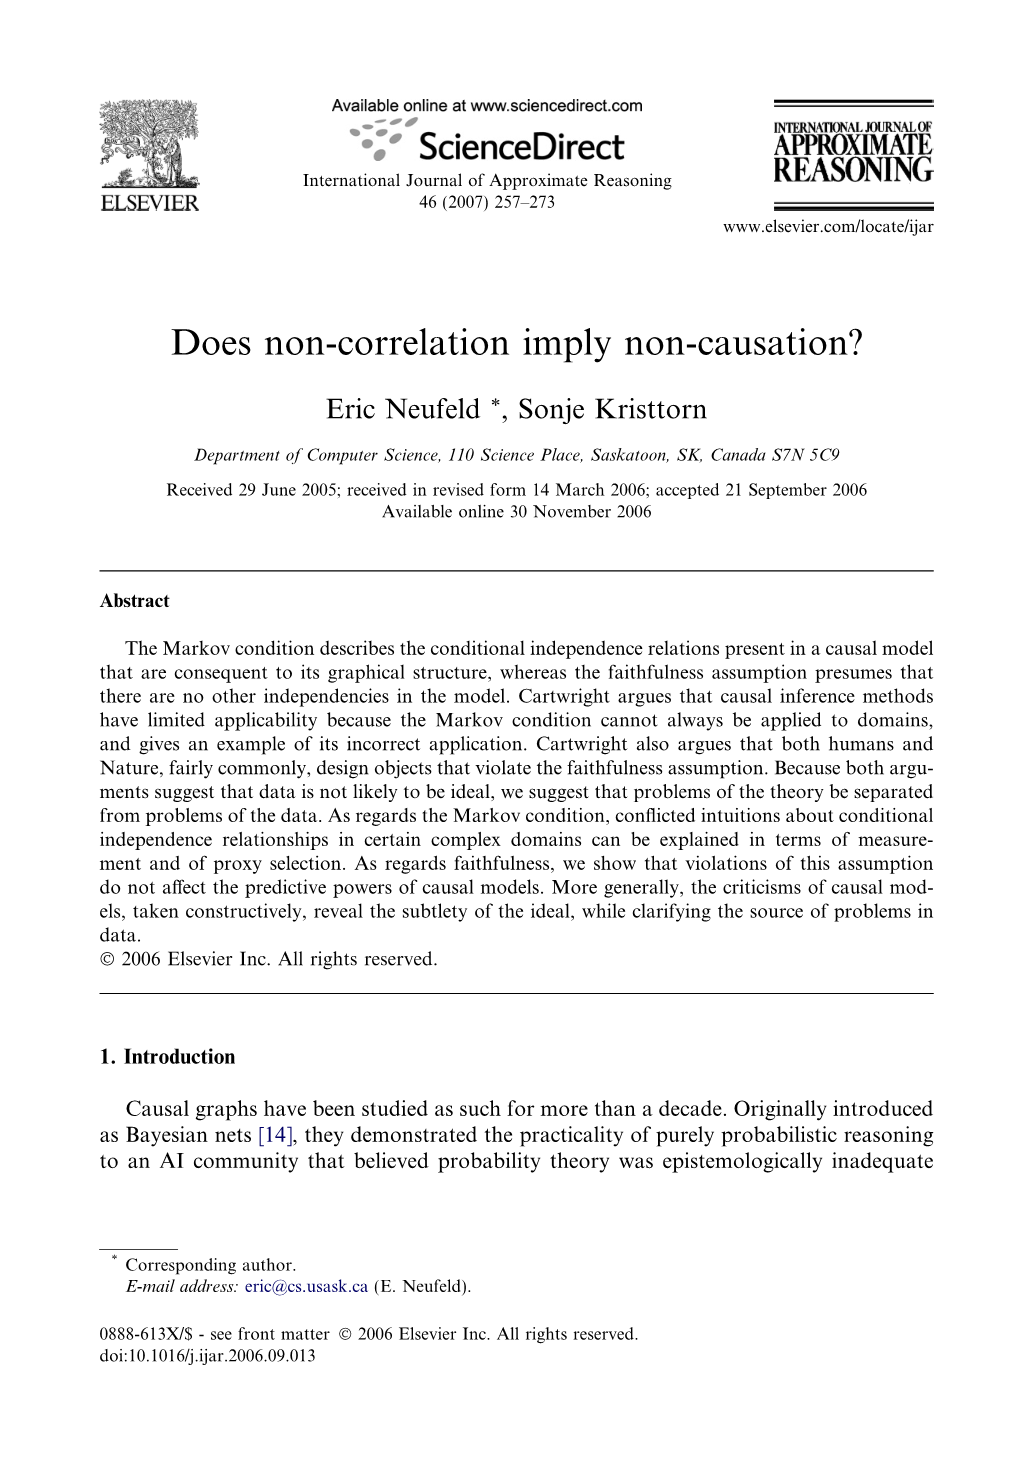 Does Non-Correlation Imply Non-Causation?